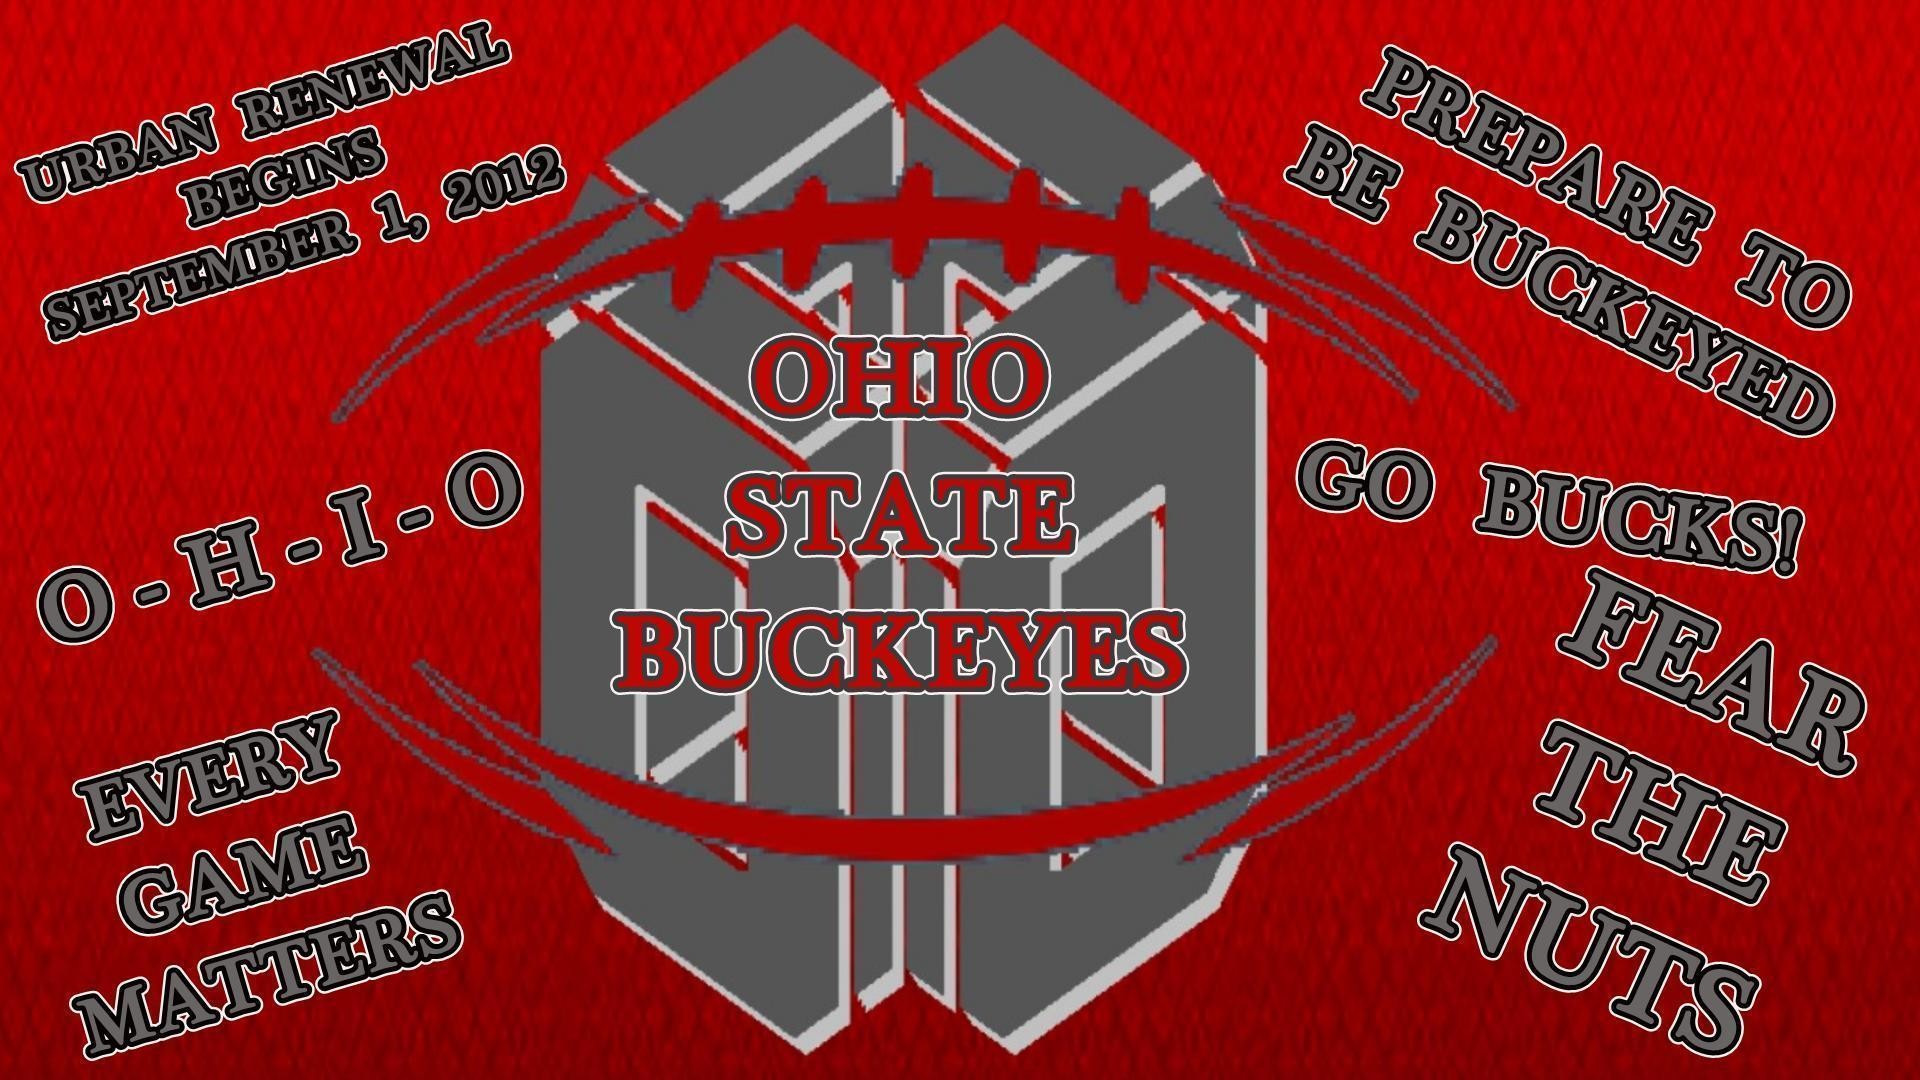 1920x1080 OHIO STATE BUCKEYES FOOTBALL - Ohio State Football Wallpaper .